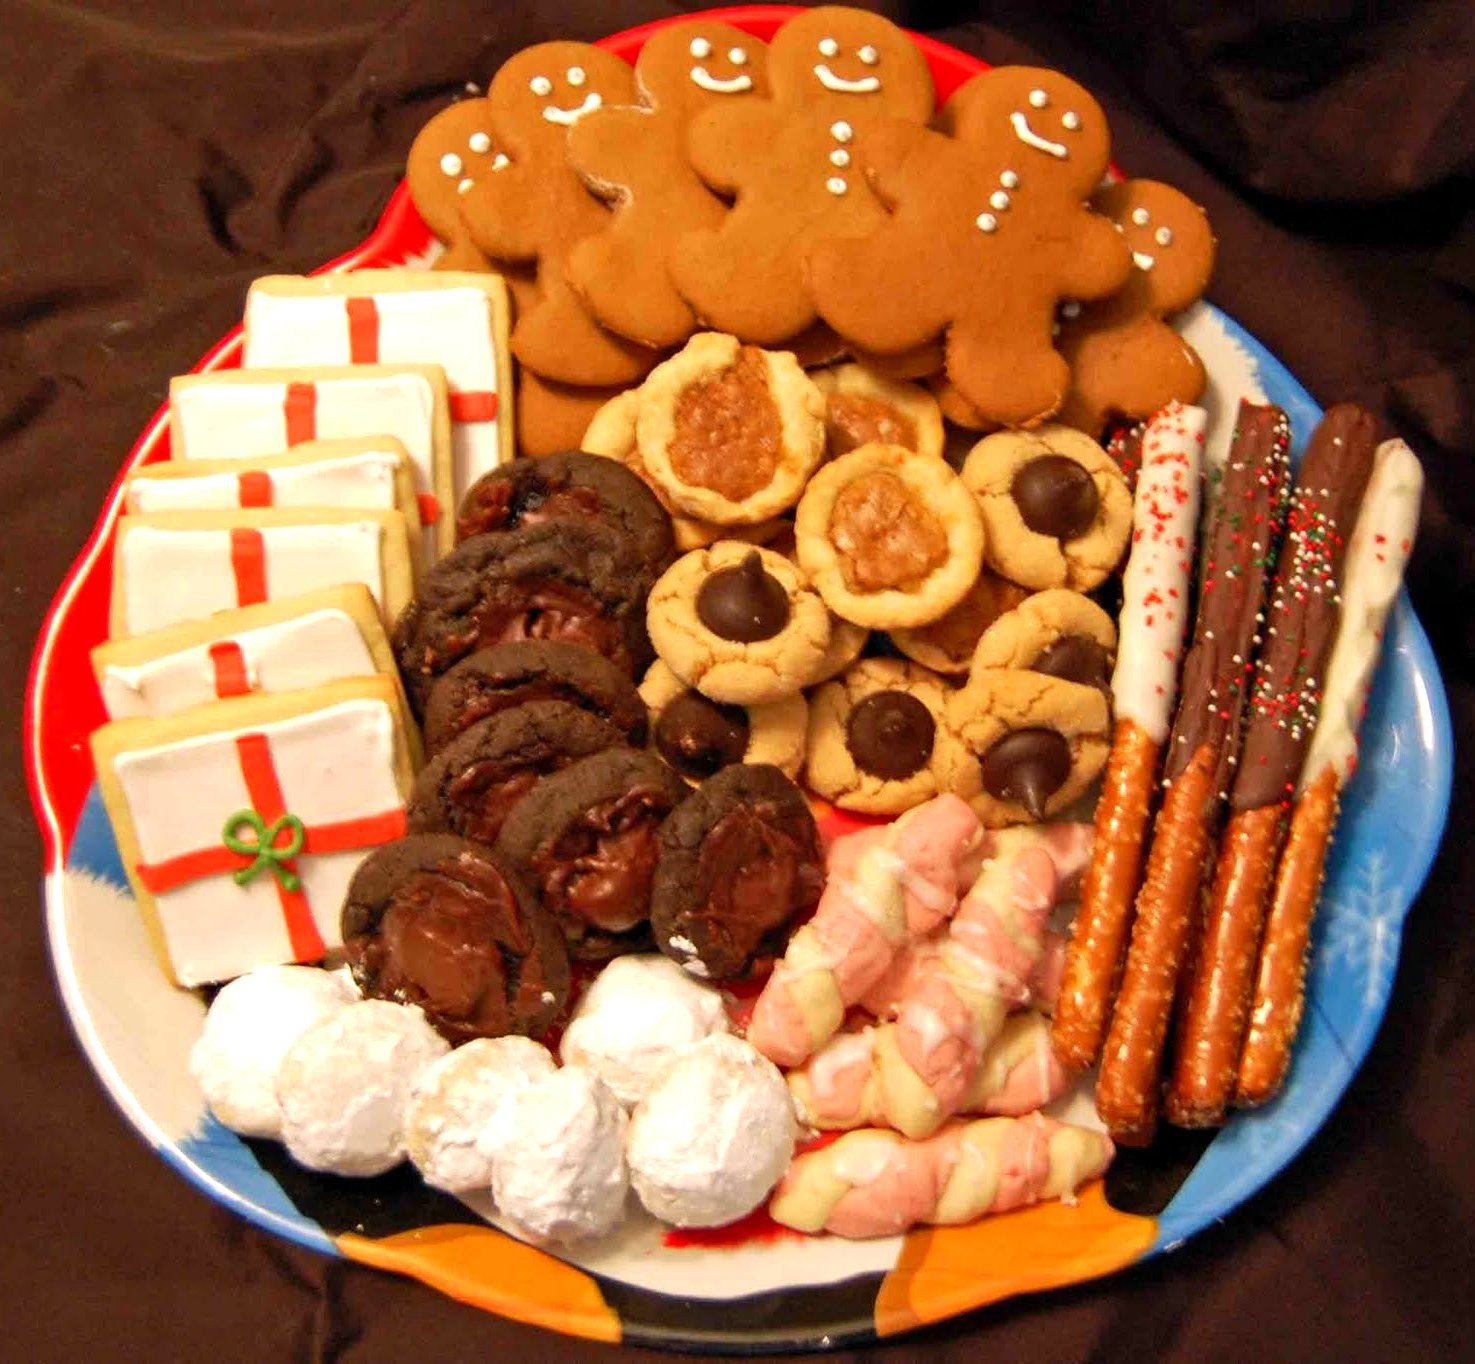 Christmas Cookies Google image from http://ae-i.com/images/2013/11/christmas-cookies-1600x1364-freezing-christmas-cookies-ae-i.com.jpg